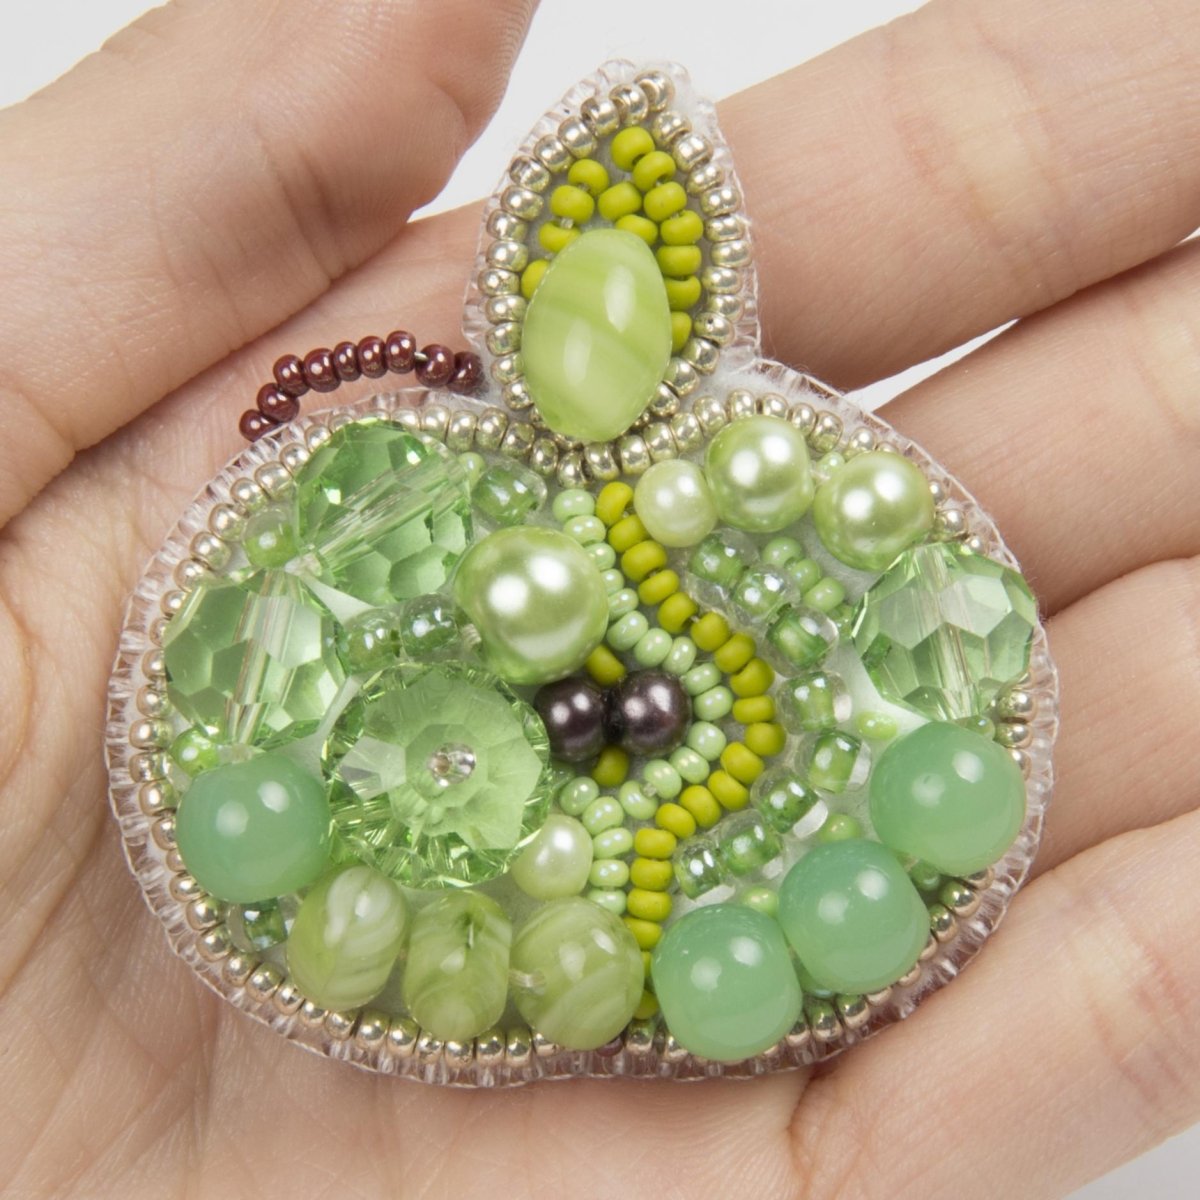 BP-256 Beadwork kit for creating broоch Crystal Art "Green apple" - Leo Hobby